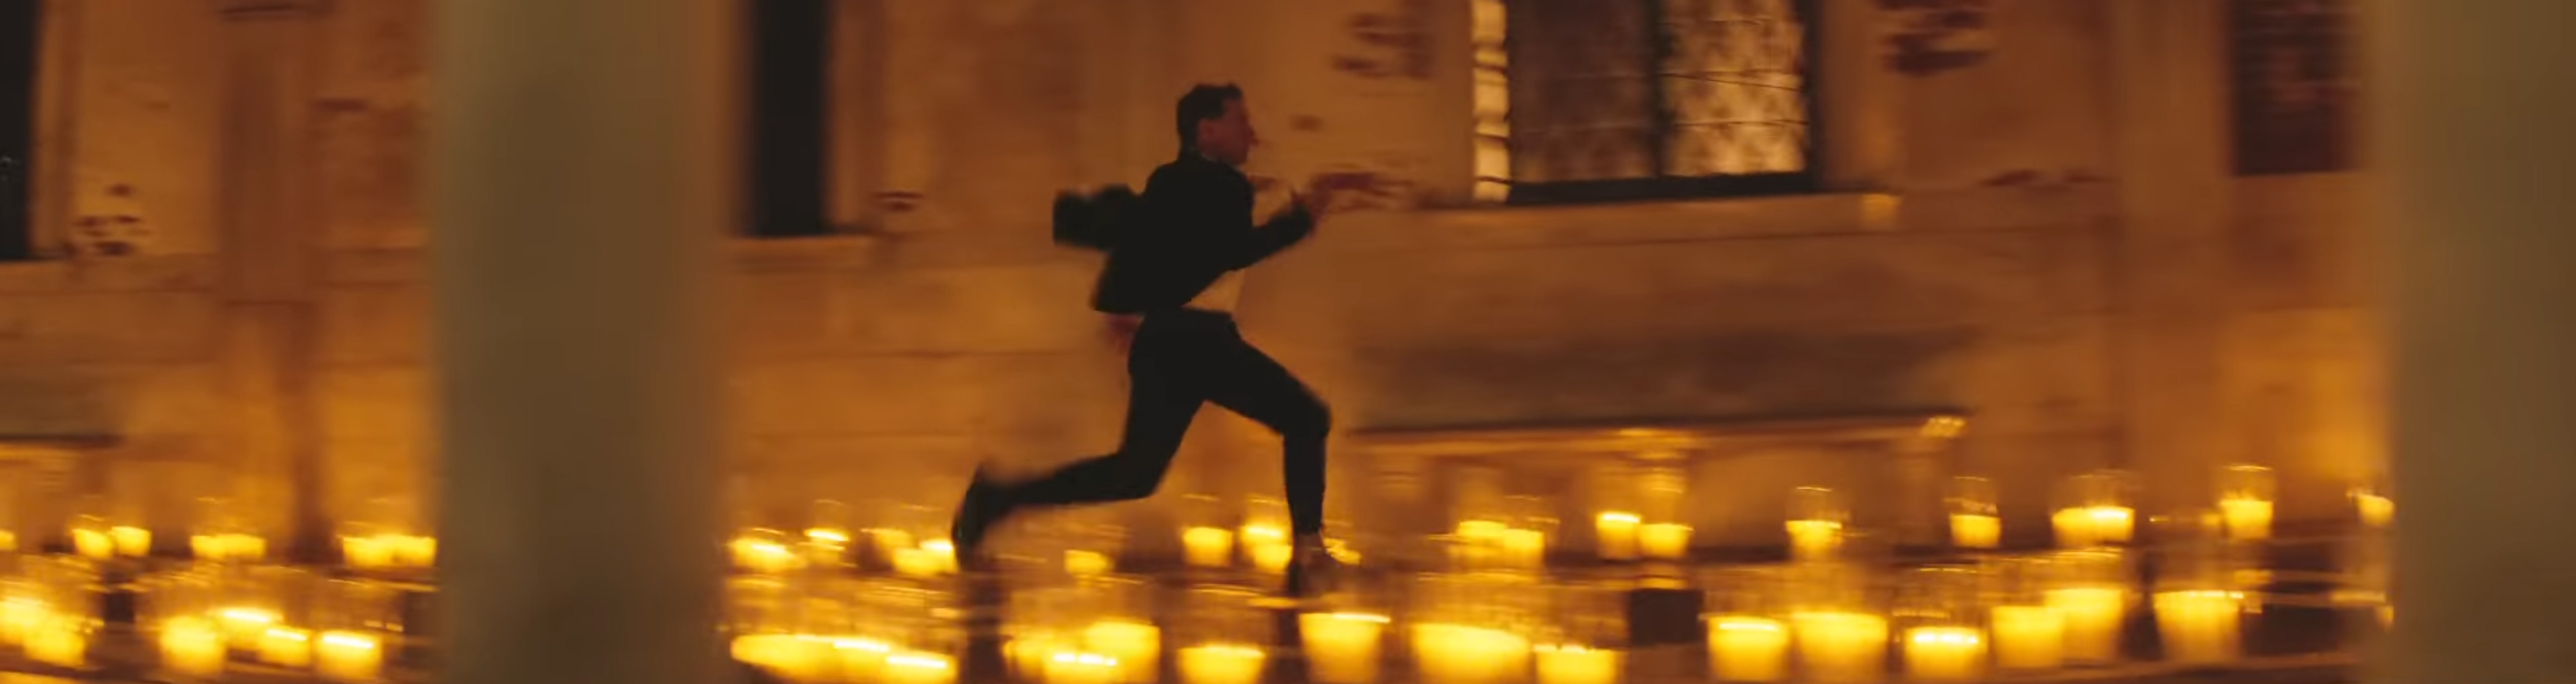 Ethan Hunt/Tom Cruise running.